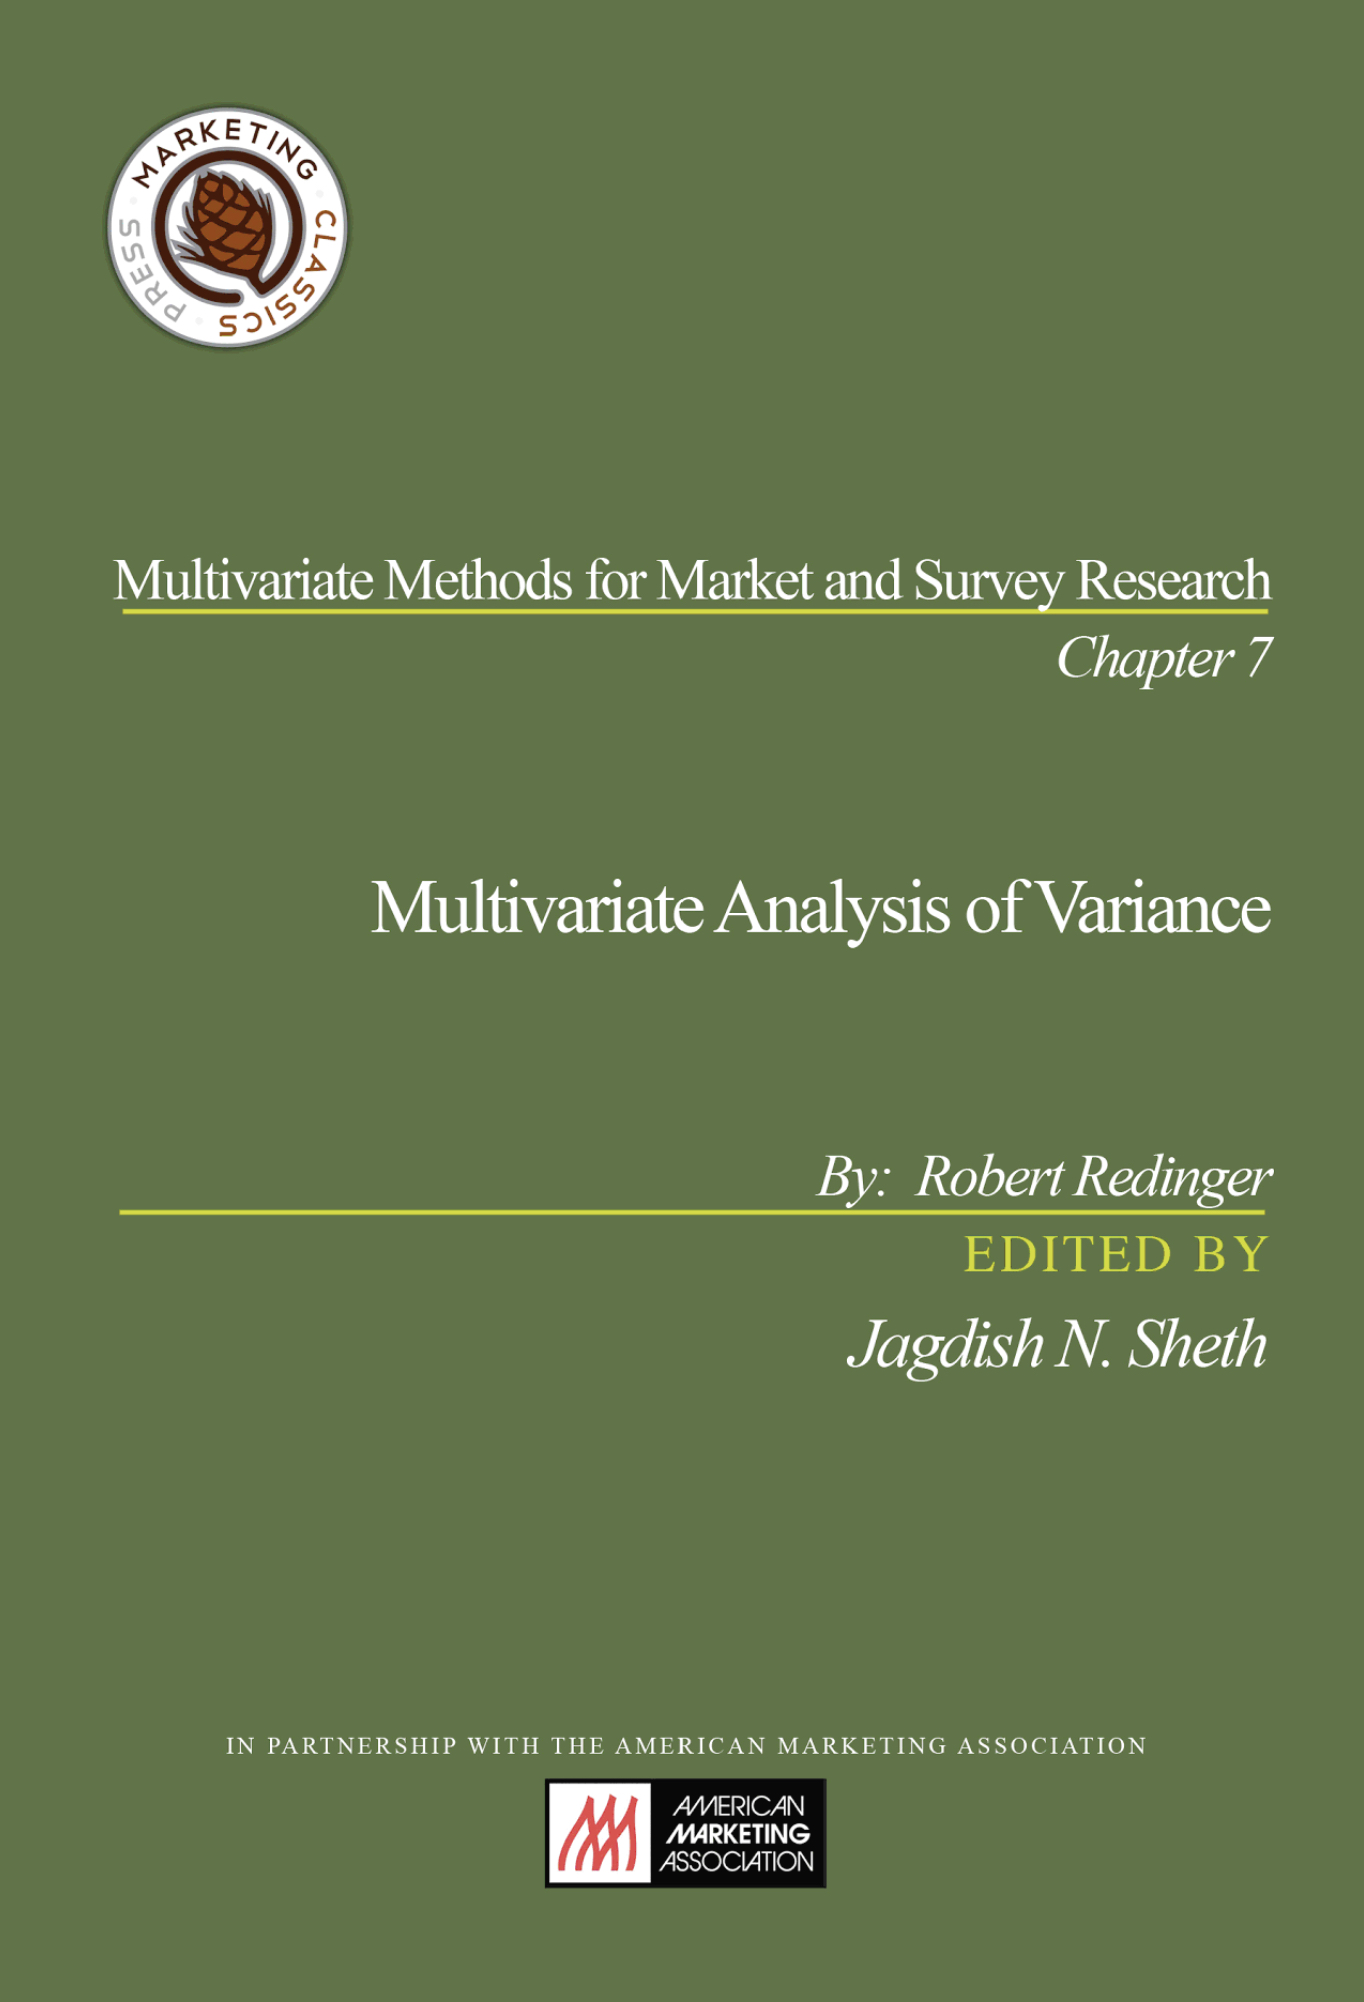 Multivariate Analysis Variance